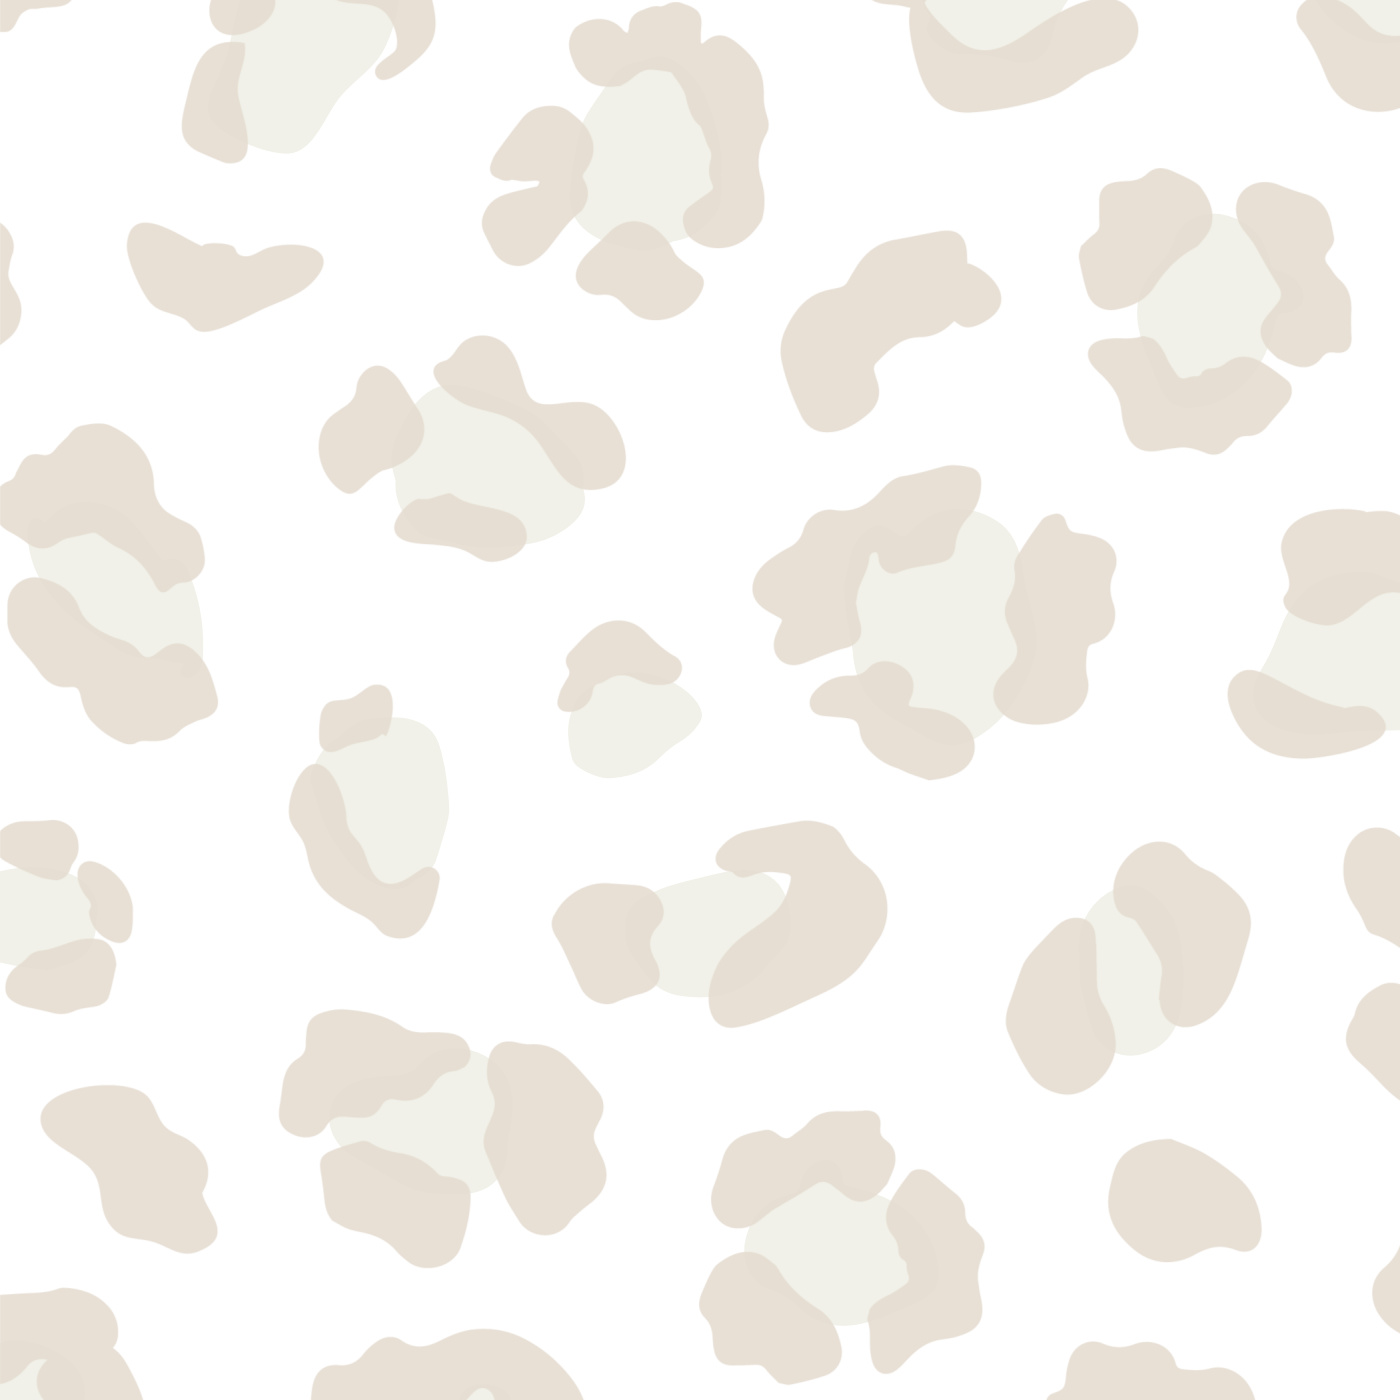 Lazy Leopard Wallpaper – Muck N Brass